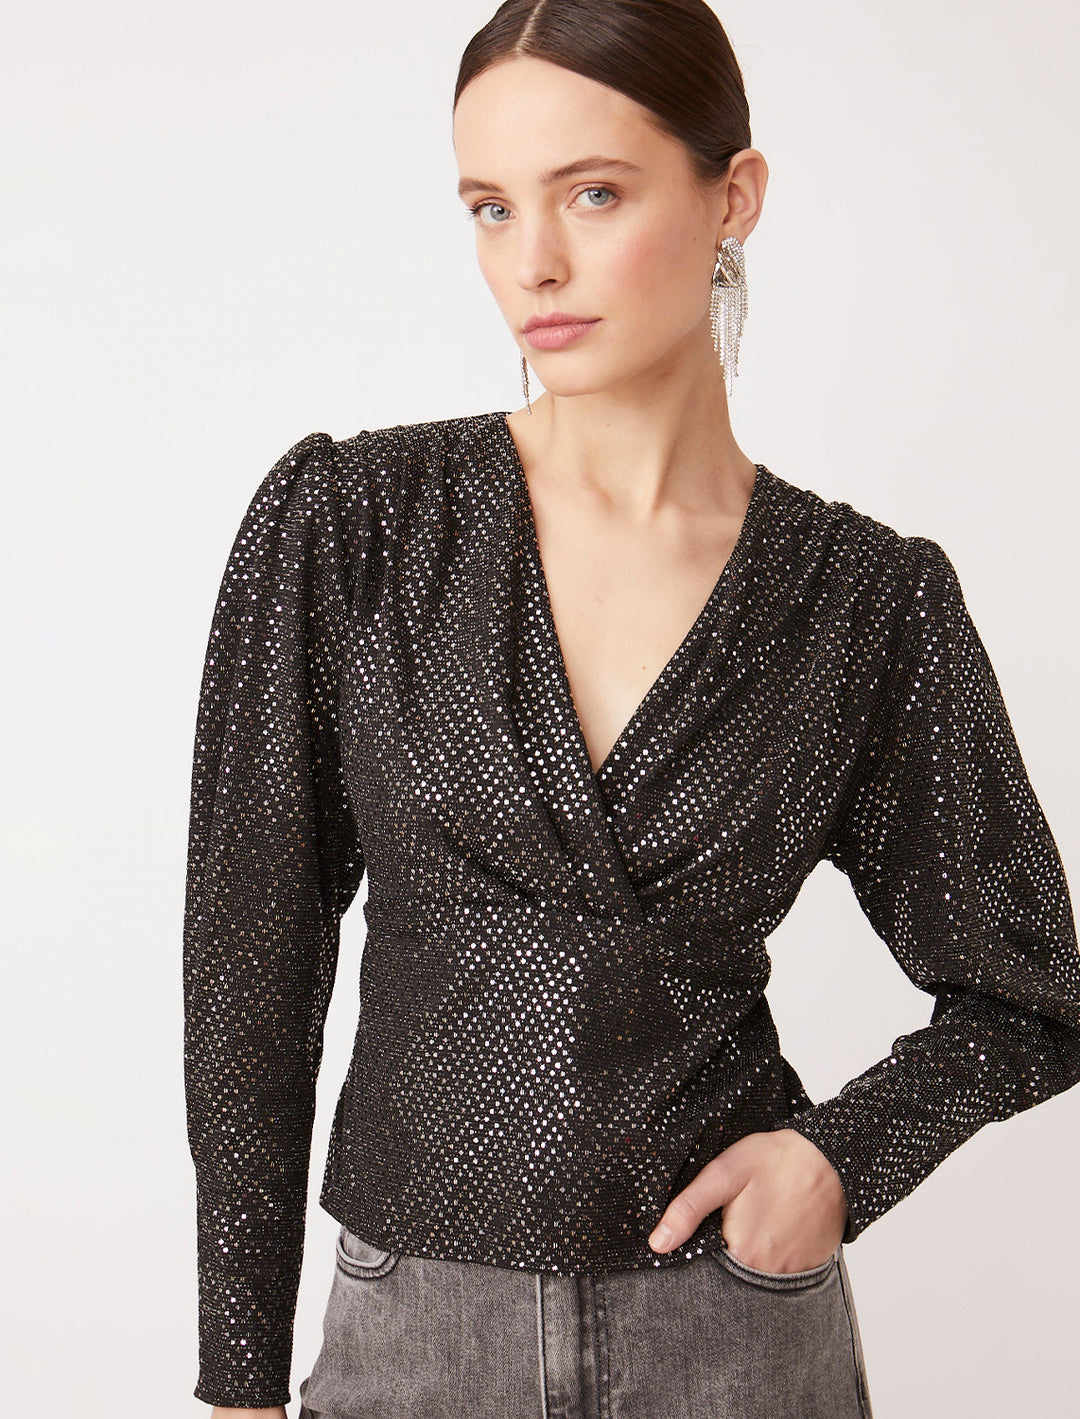 Model wearing Suncoo Paris' lorena blouse in noir.